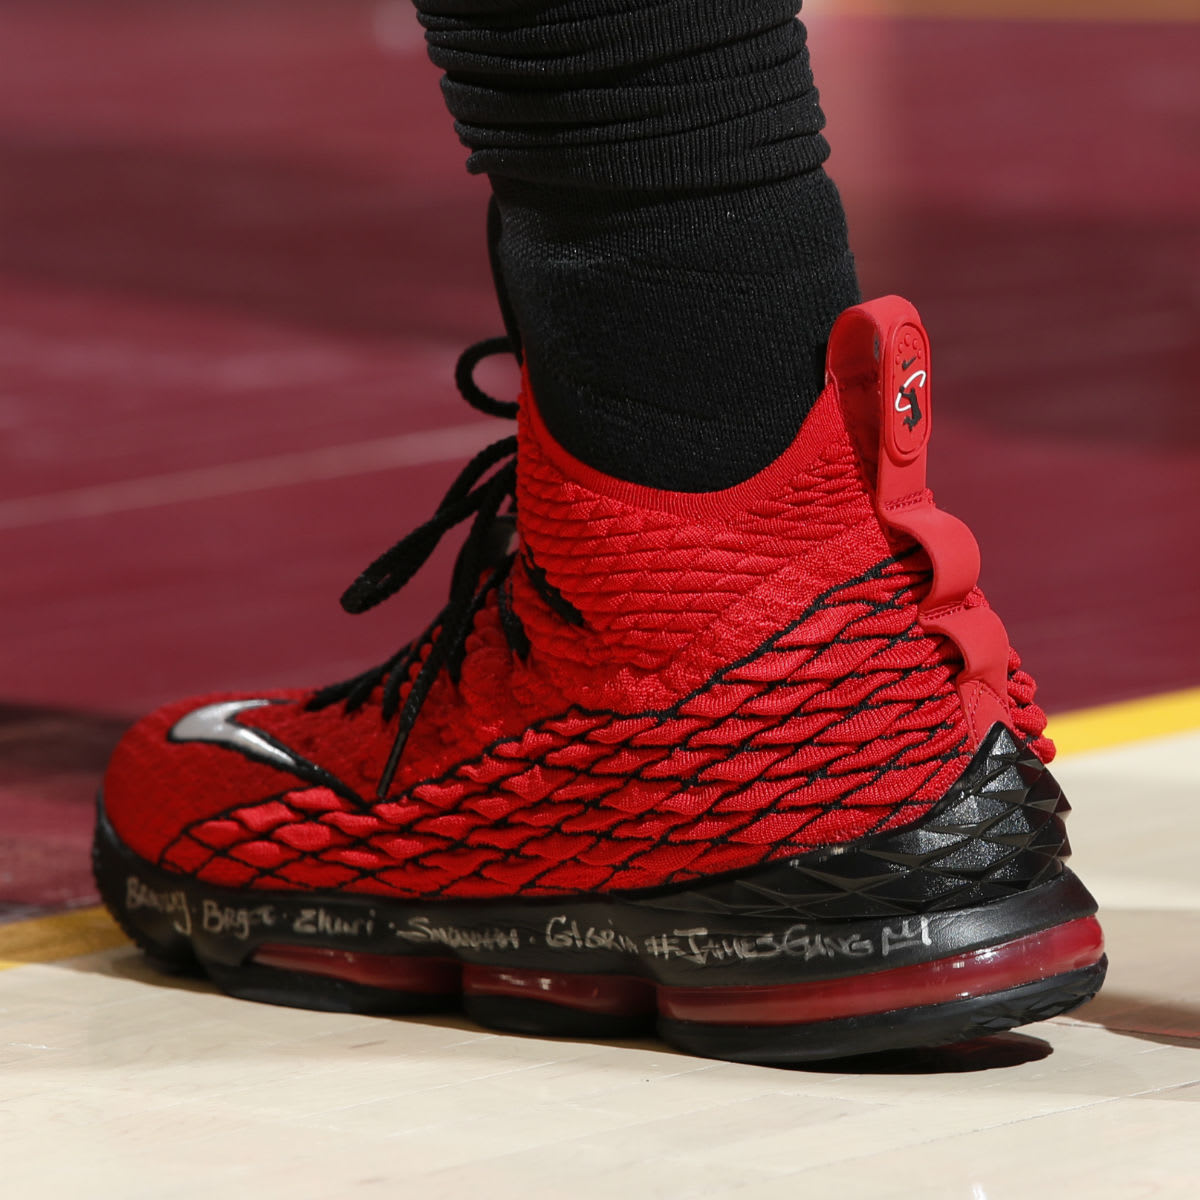 Increíbles Nike Lebron 15 rojos - Nike, basketball y Lebron James